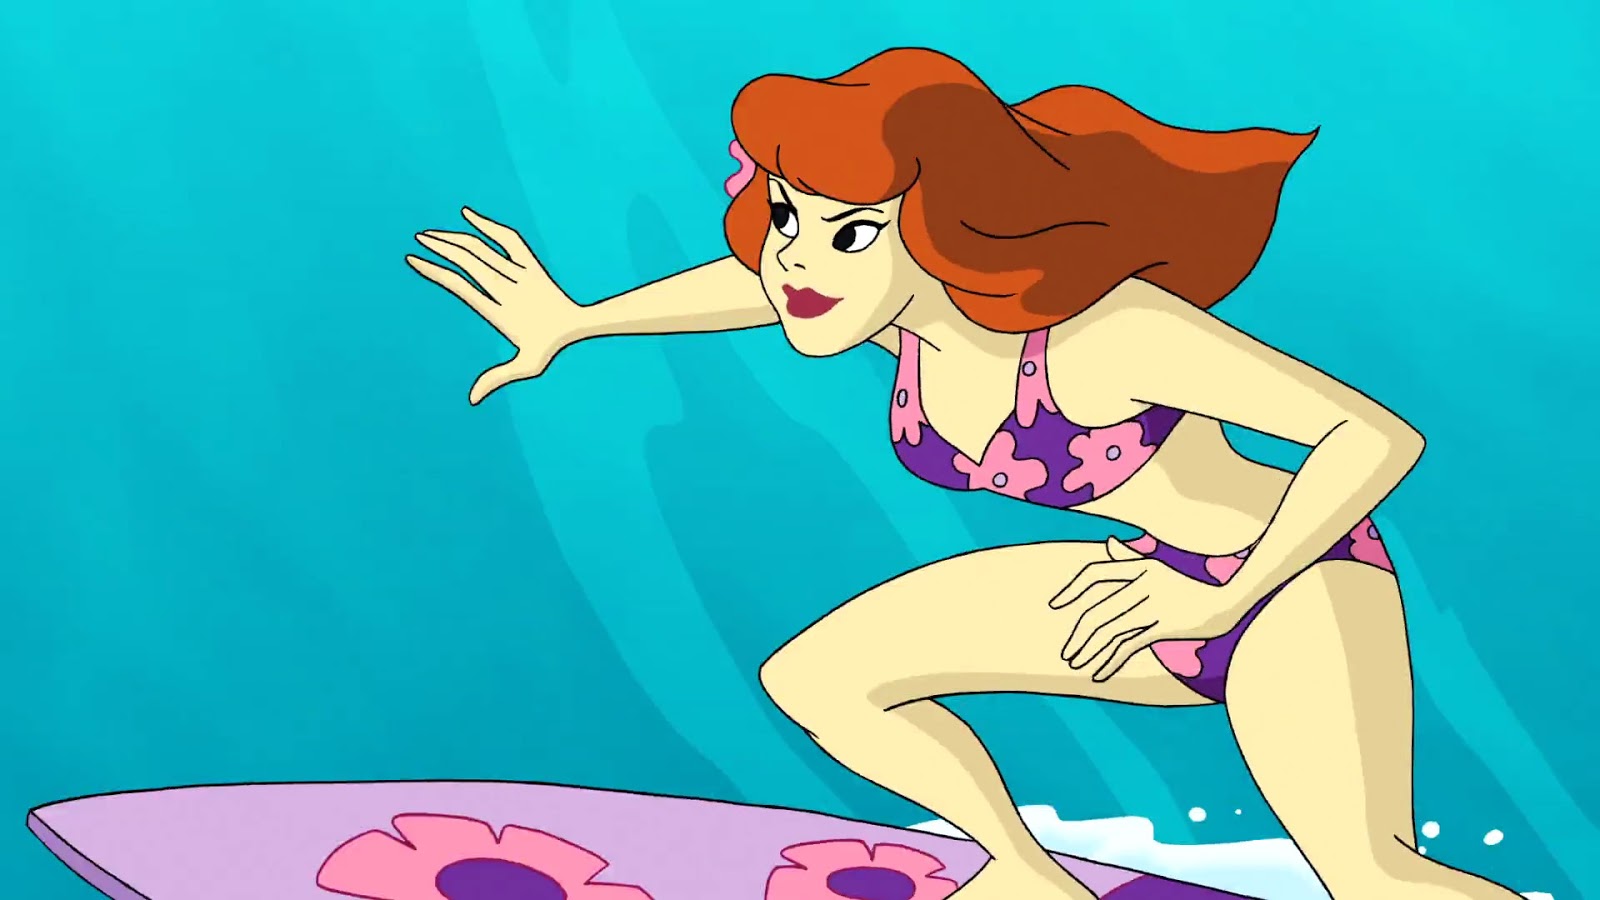 aloha Scooby doo screencaps: daphne blake she wearing swimwear so pretty an...